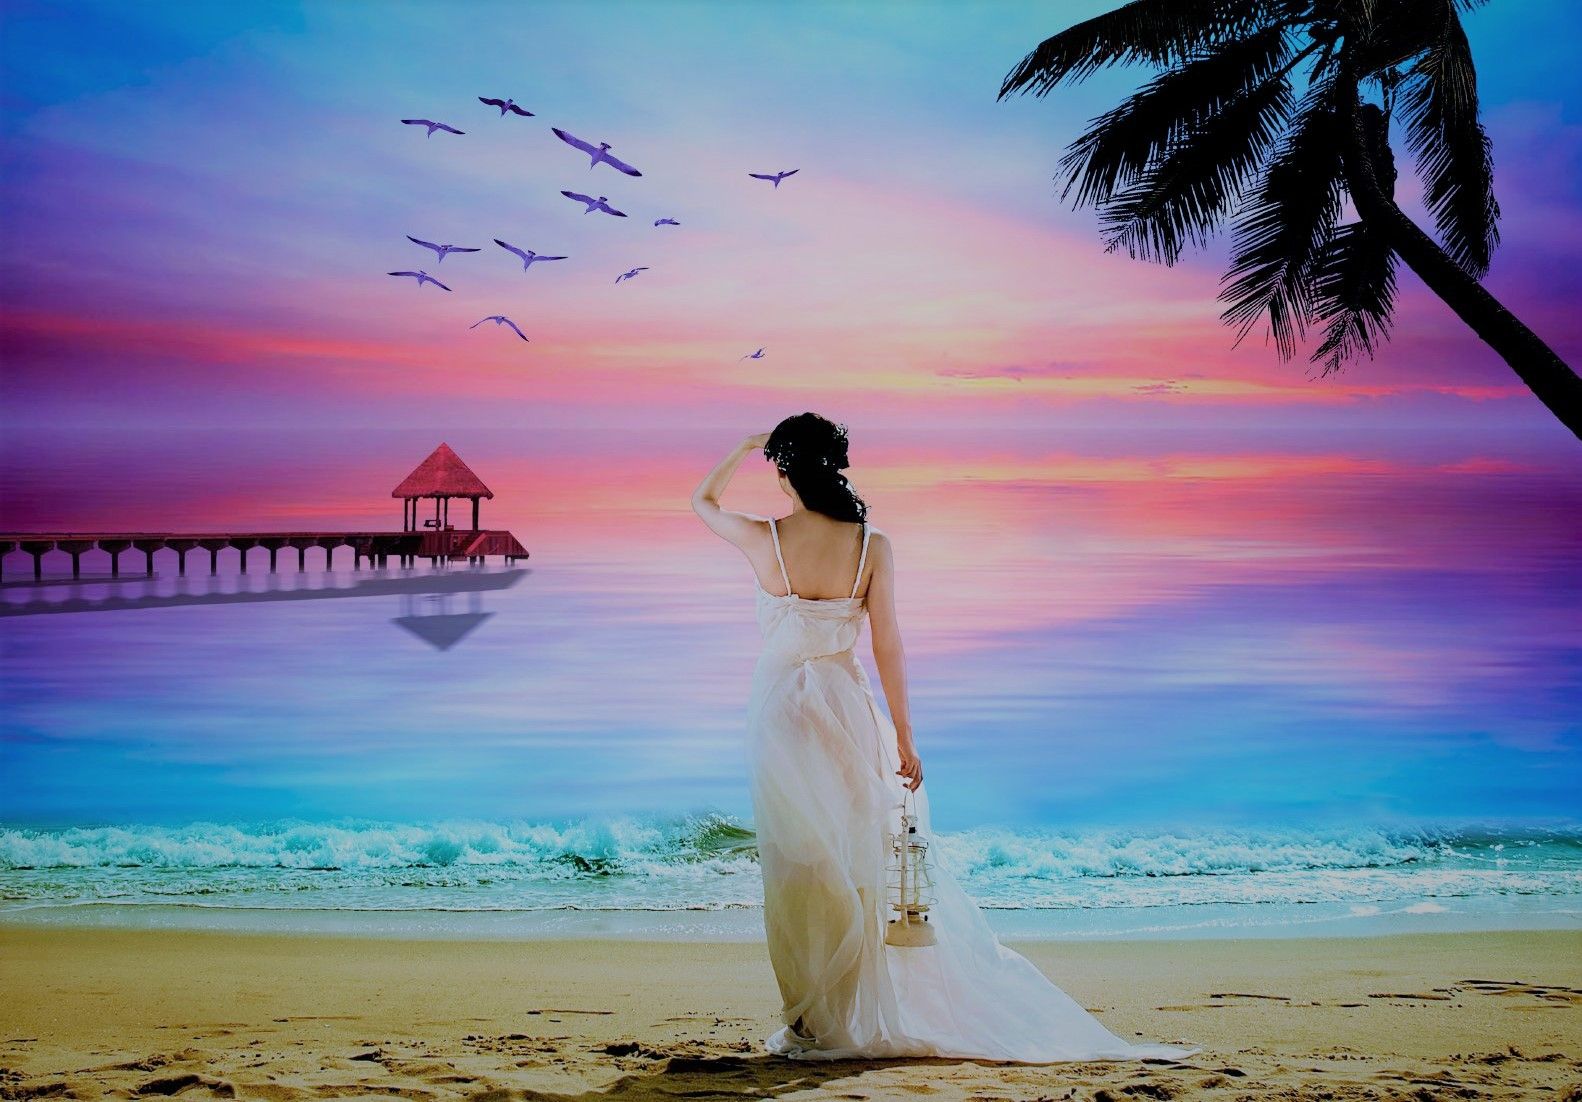 woman-on-the-beach,-wooden-pier,-palm-tree-over-sandy-beach,-colorful-sky-215129.jpg